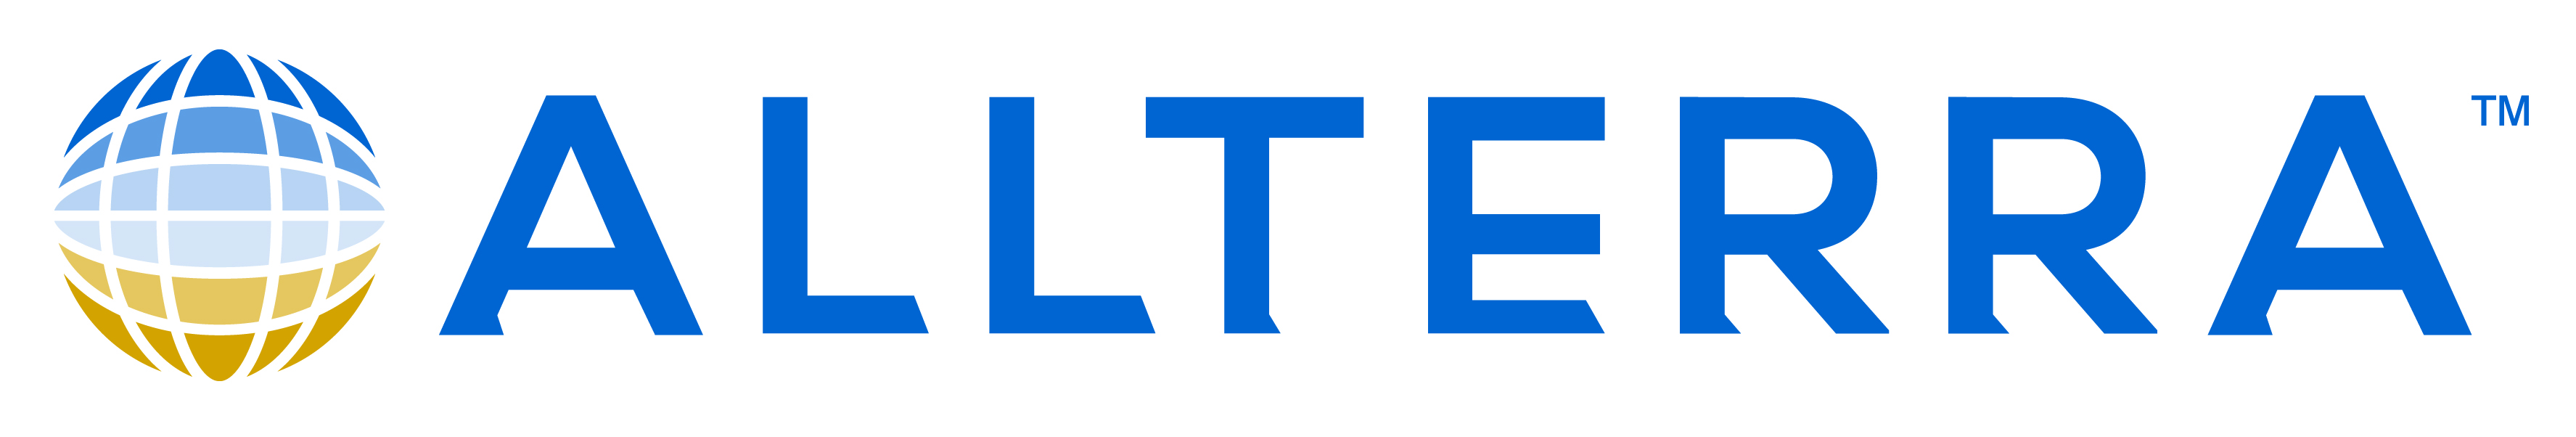 Allterra Central logo and link